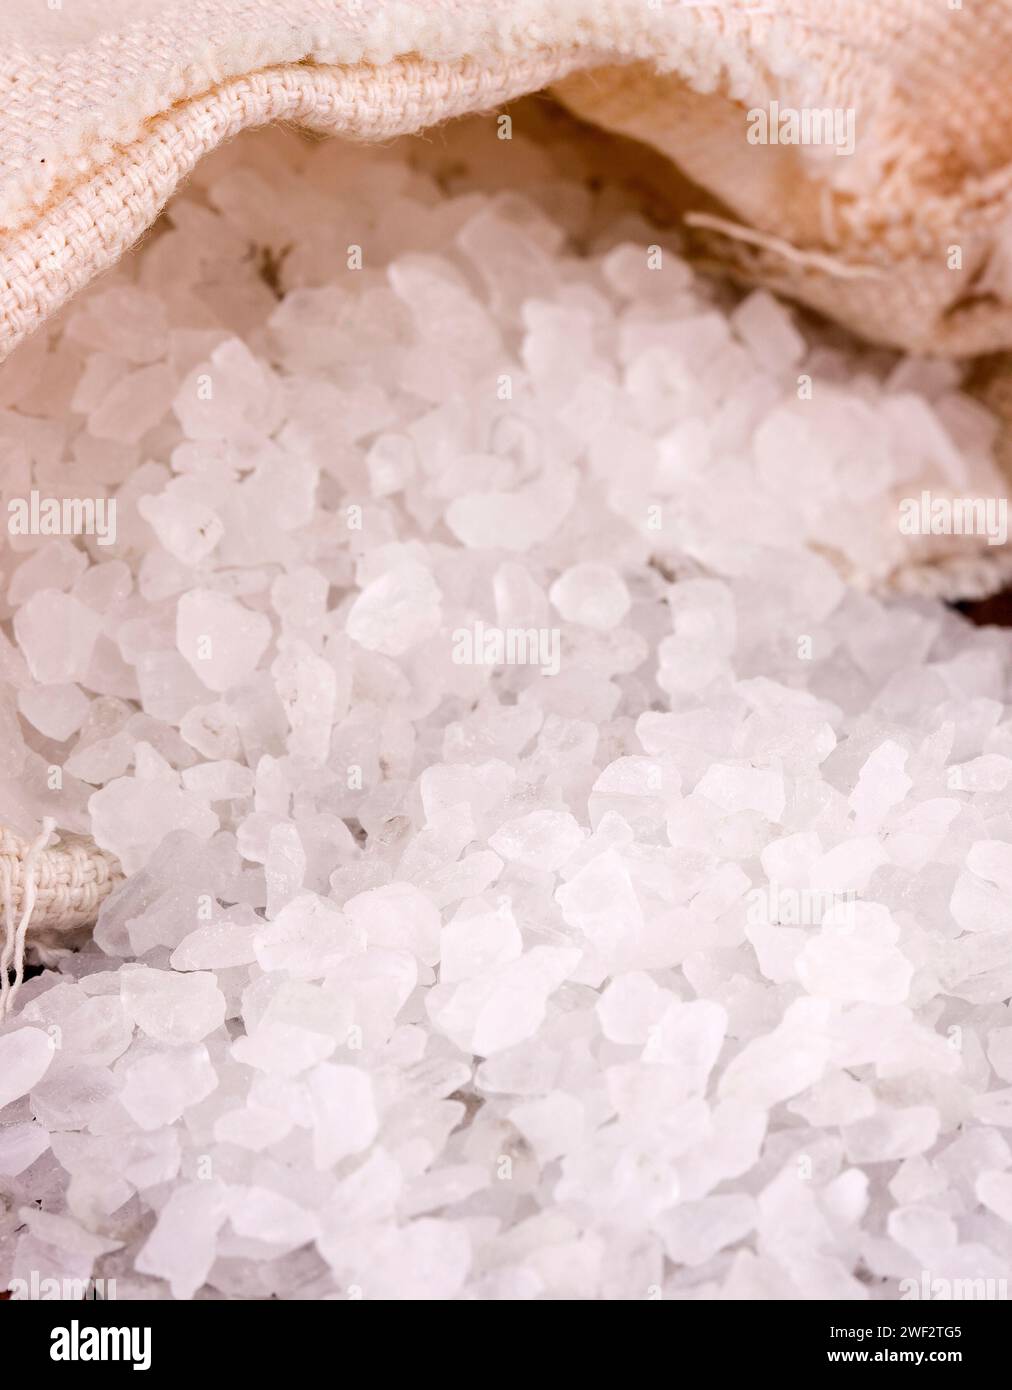 The sea salt in jute sack close up. Stile life concept Stock Photo